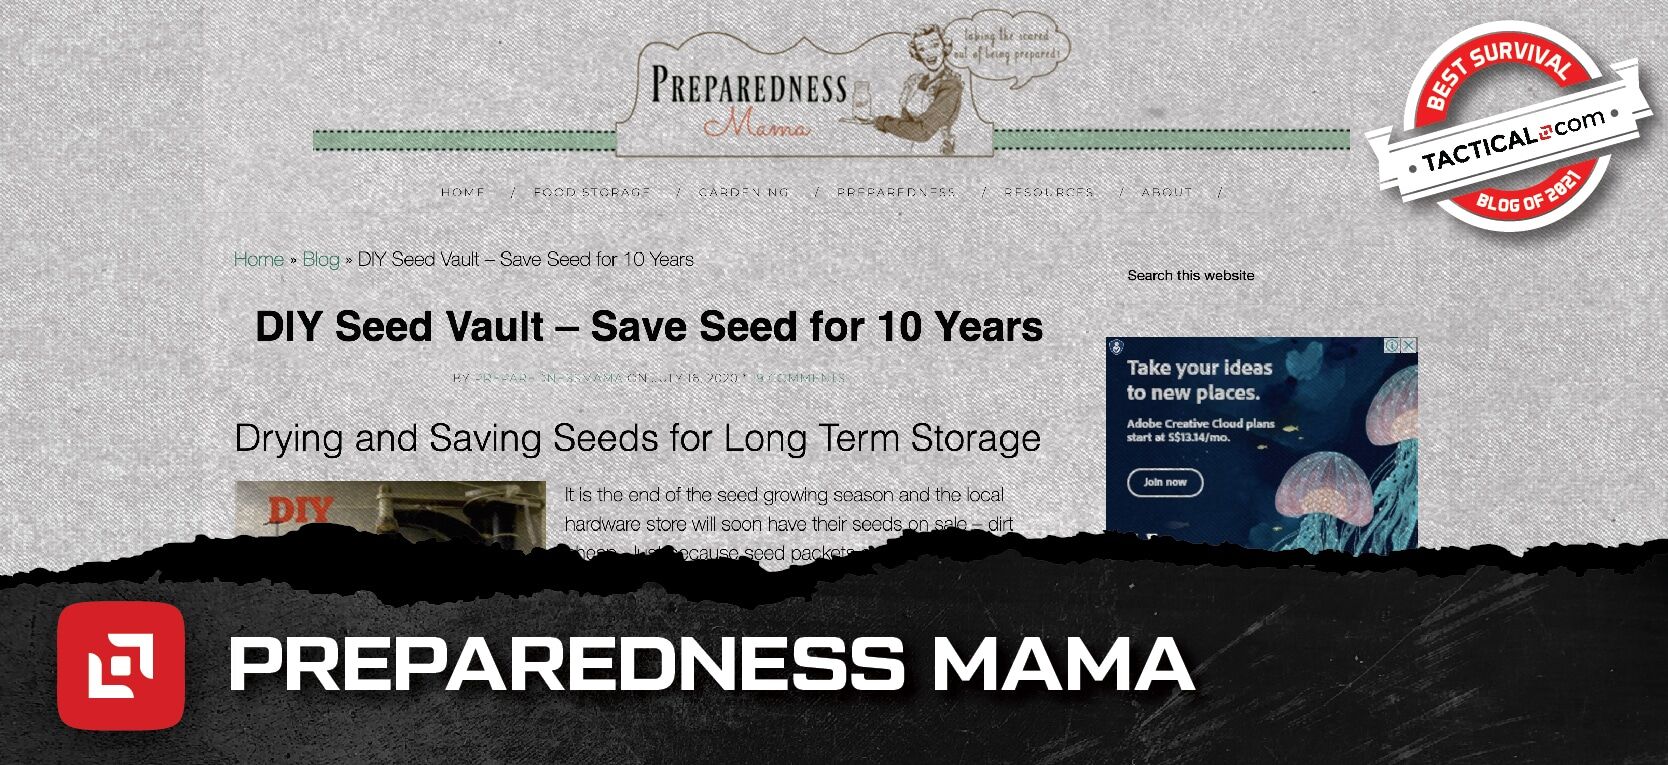 Preparedness Mama homepage